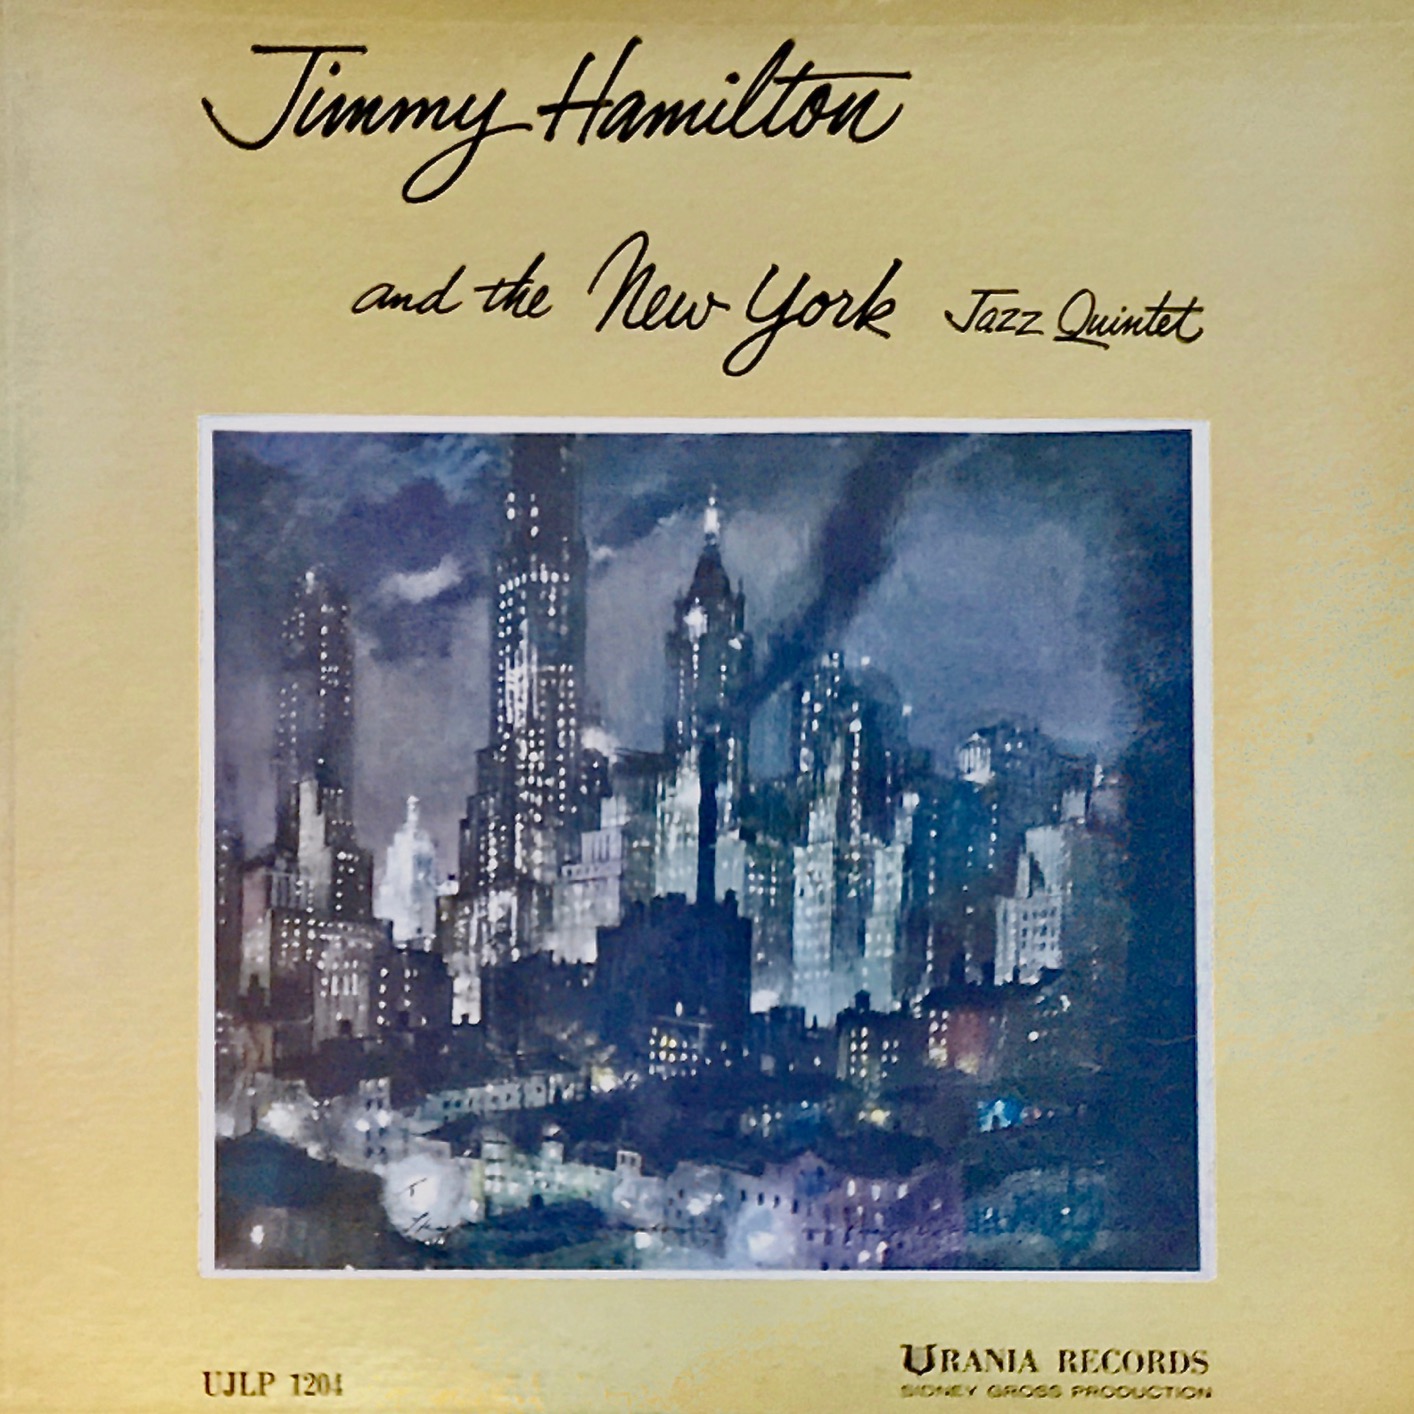 Jimmy Hamilton and the New York Jazz Quintet – Jimmy Hamilton And The New York Jazz Quintet (1956/2019) [FLAC 24bit/96kHz]